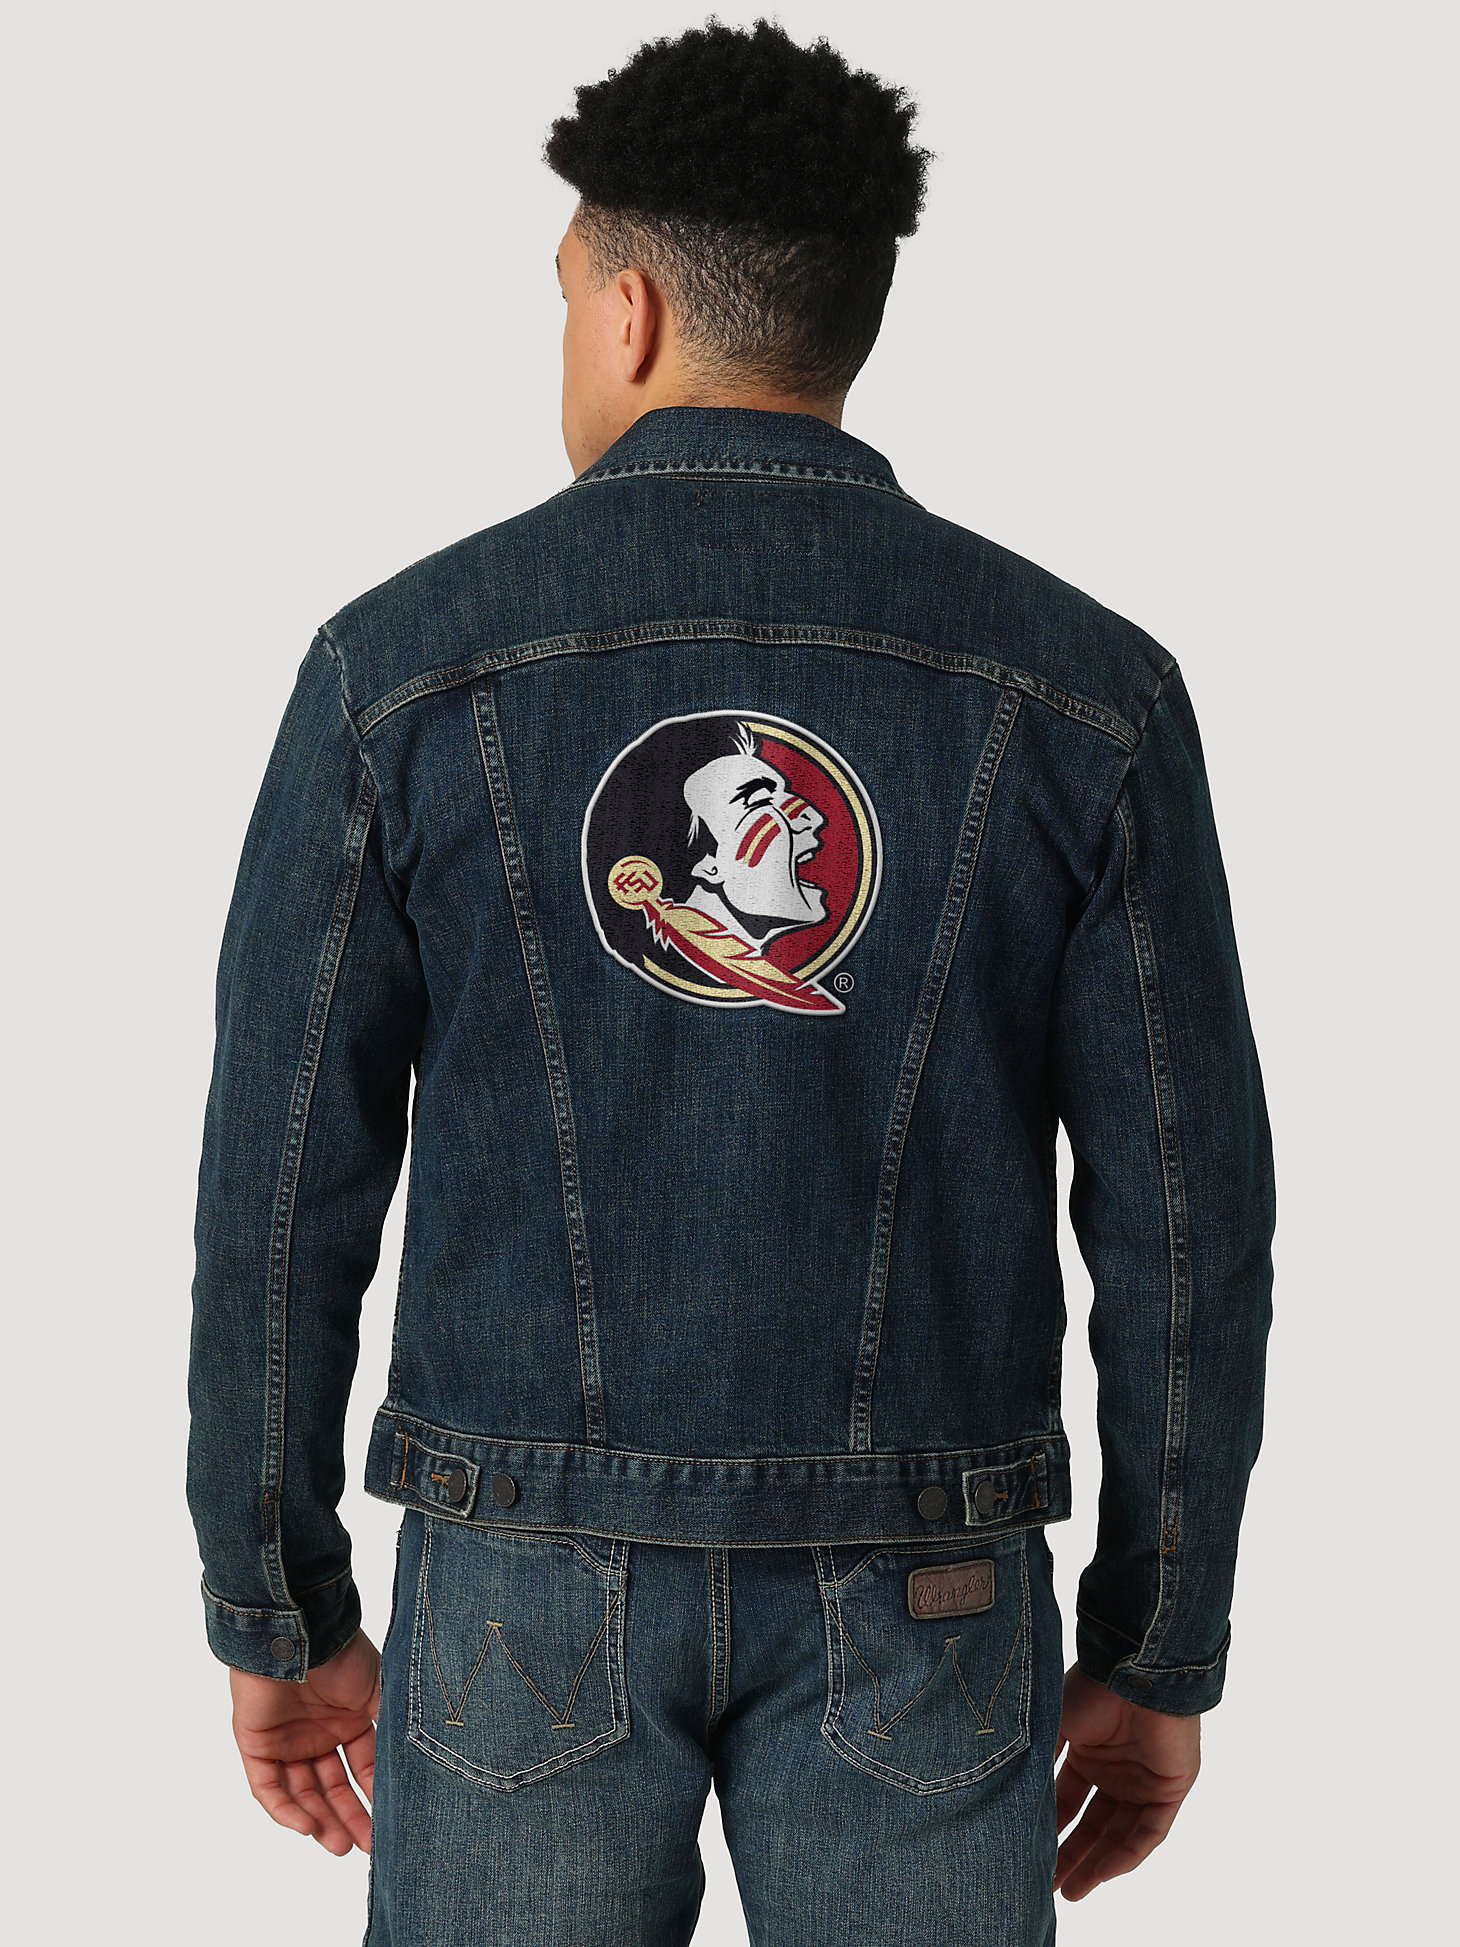 Men's Wrangler Retro Collegiate Embroidered Denim Jacket in Florida State alternative view 1